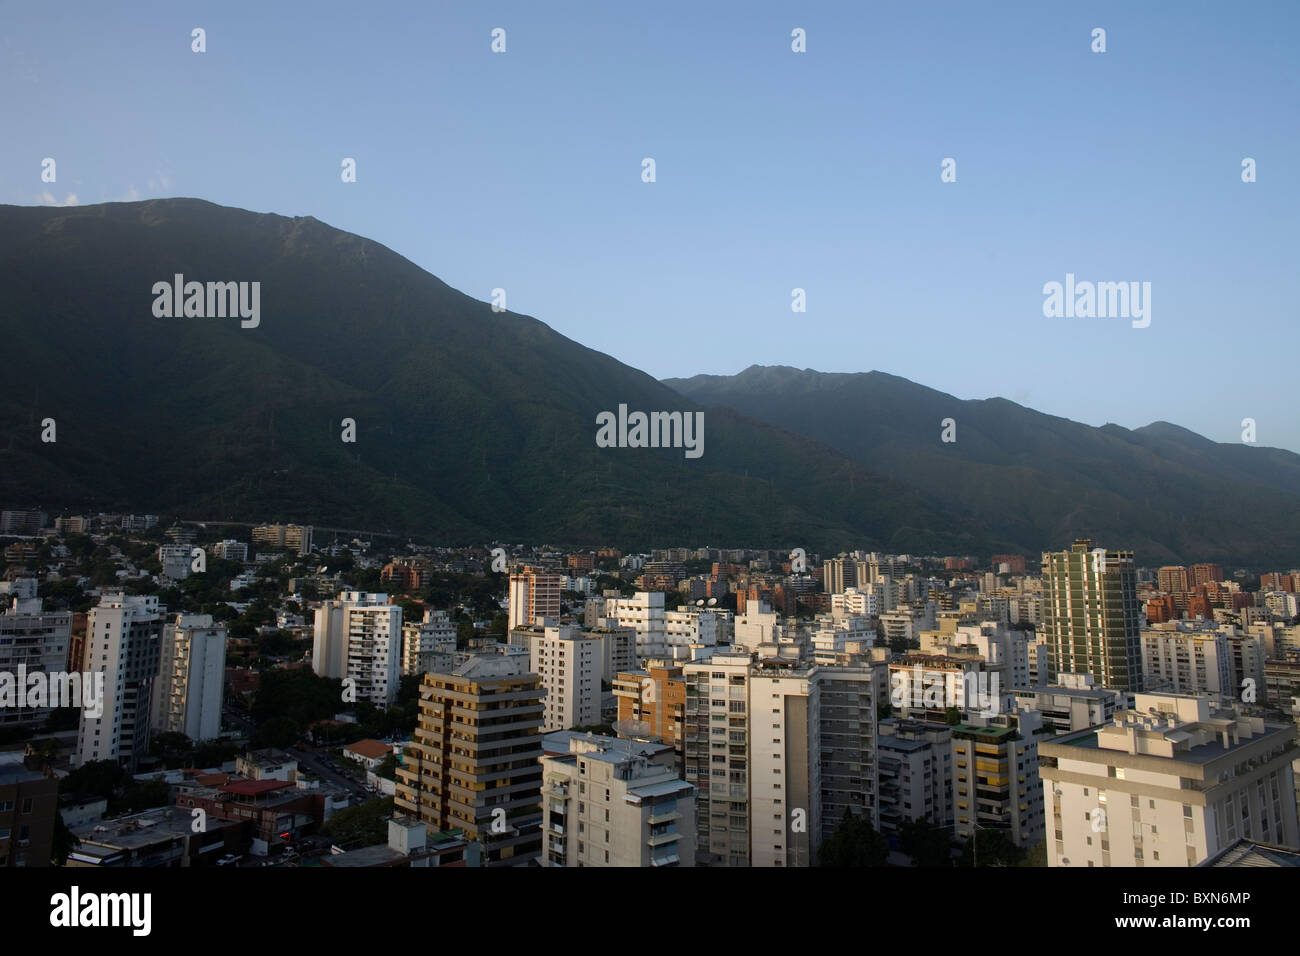 Los Palos Grandes neighborhood at the base of Avila mountain in Caracas, Venezuela, July 22, 2008. Stock Photo